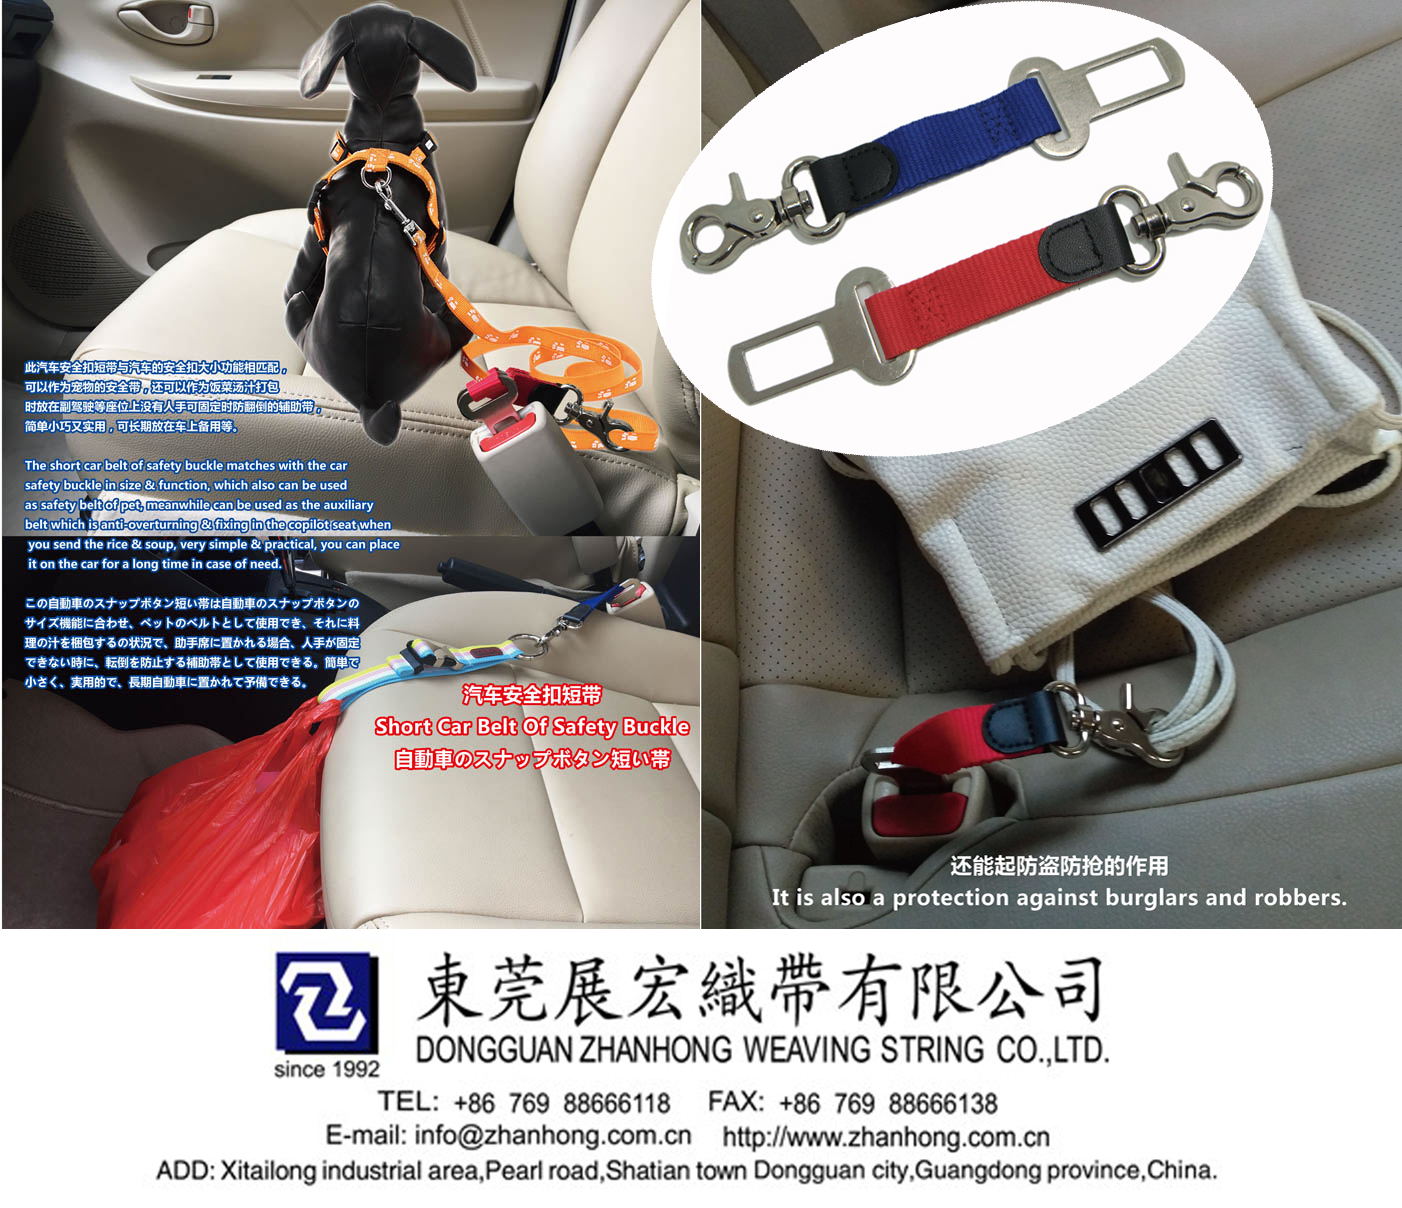 Short car belts of safety buckle